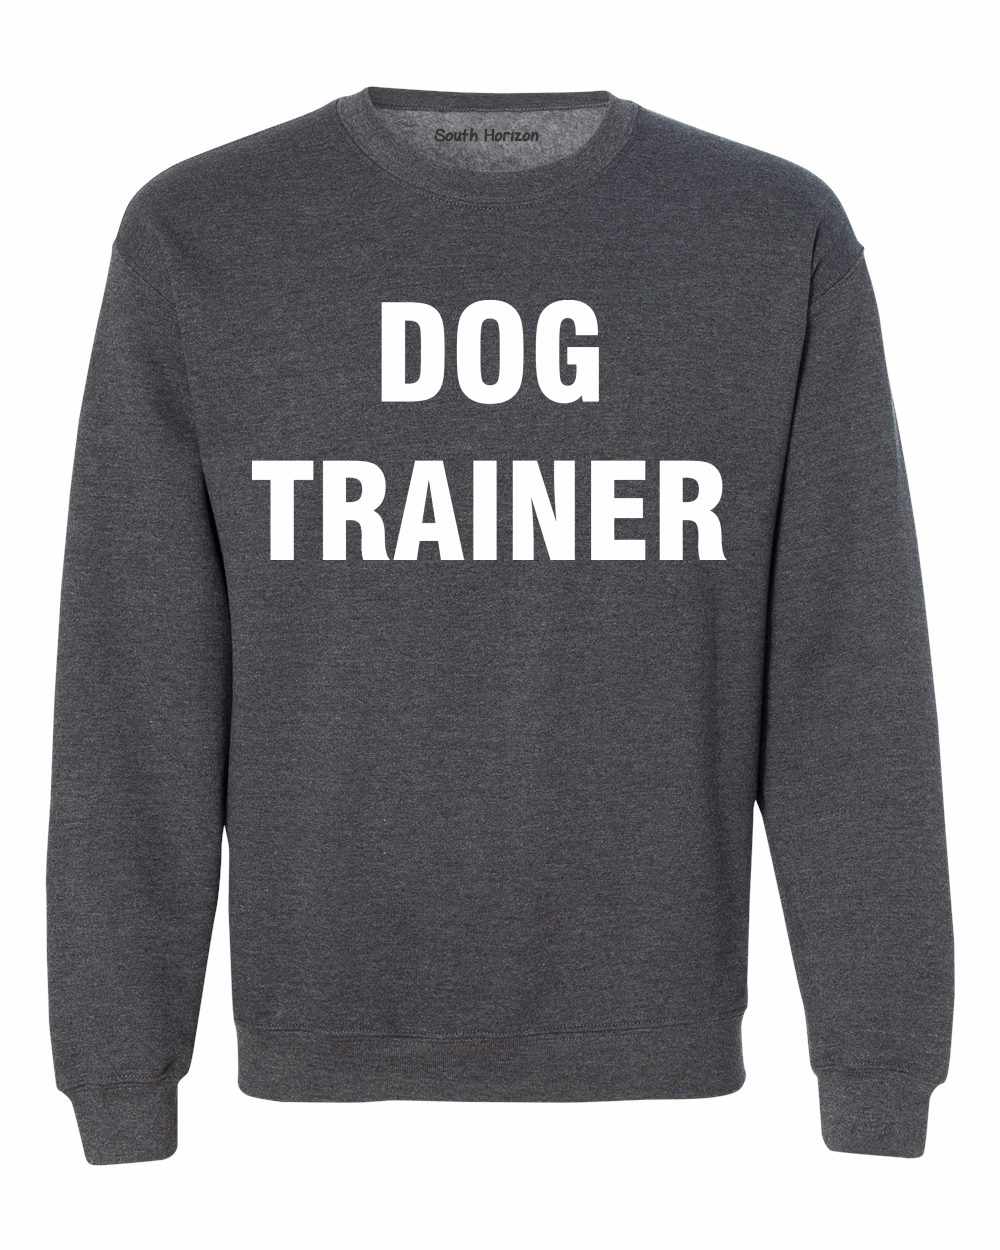 DOG TRAINER on SweatShirt